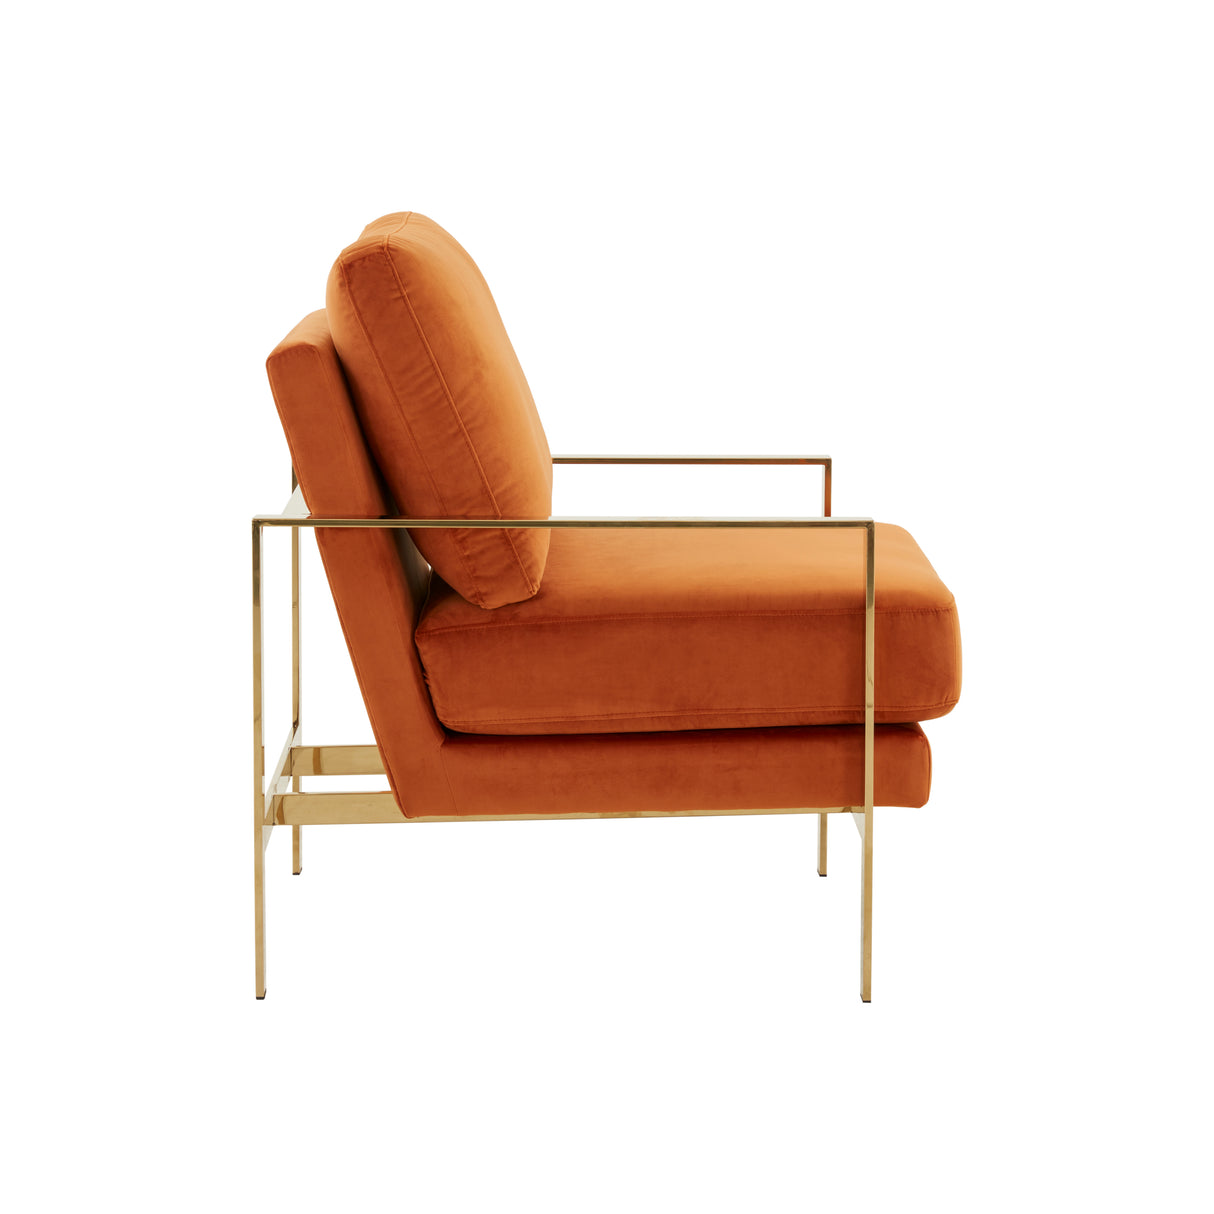 Divani Casa Bayside Modern Orange Fabric Accent Chair - Home Elegance USA